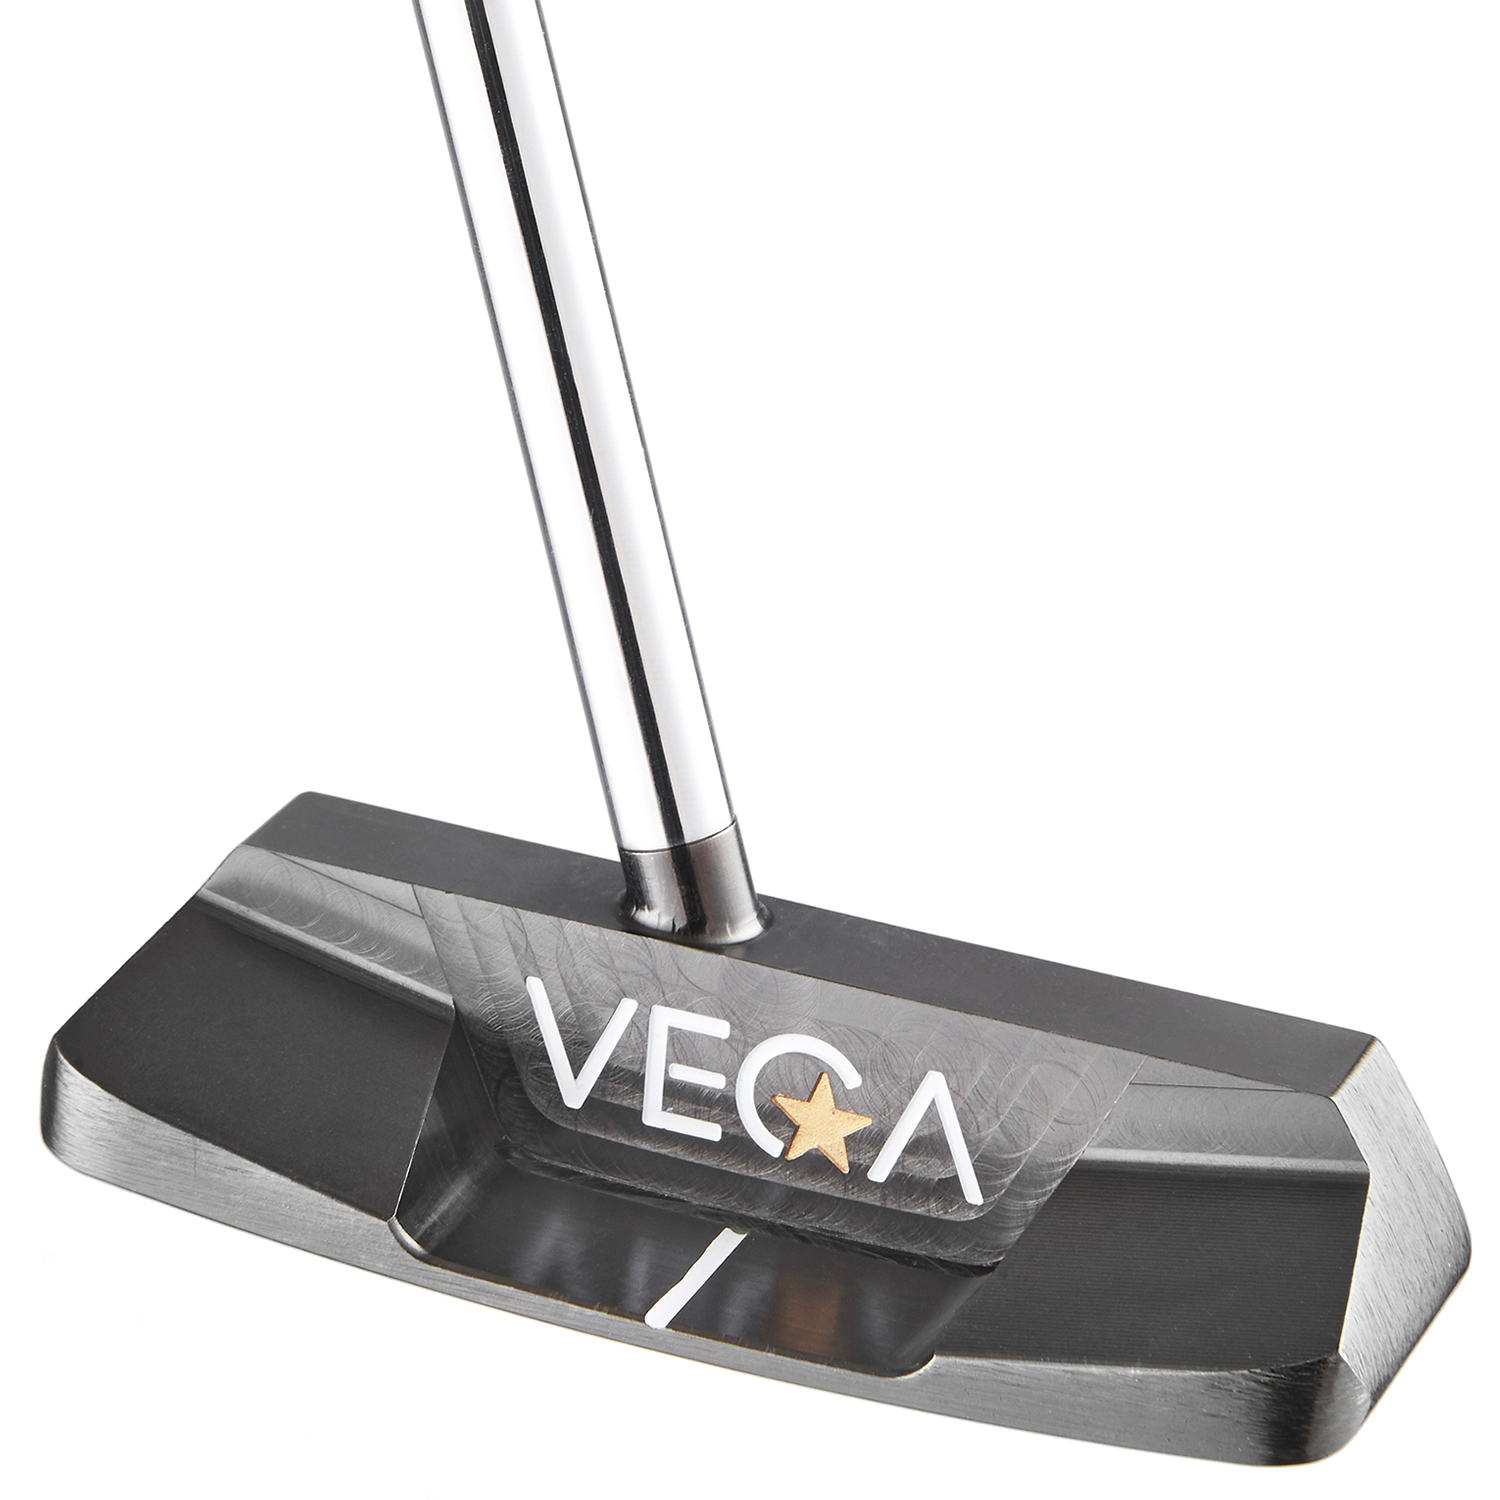 VEGA VP-05 Raw Limited Edition Golf Putter